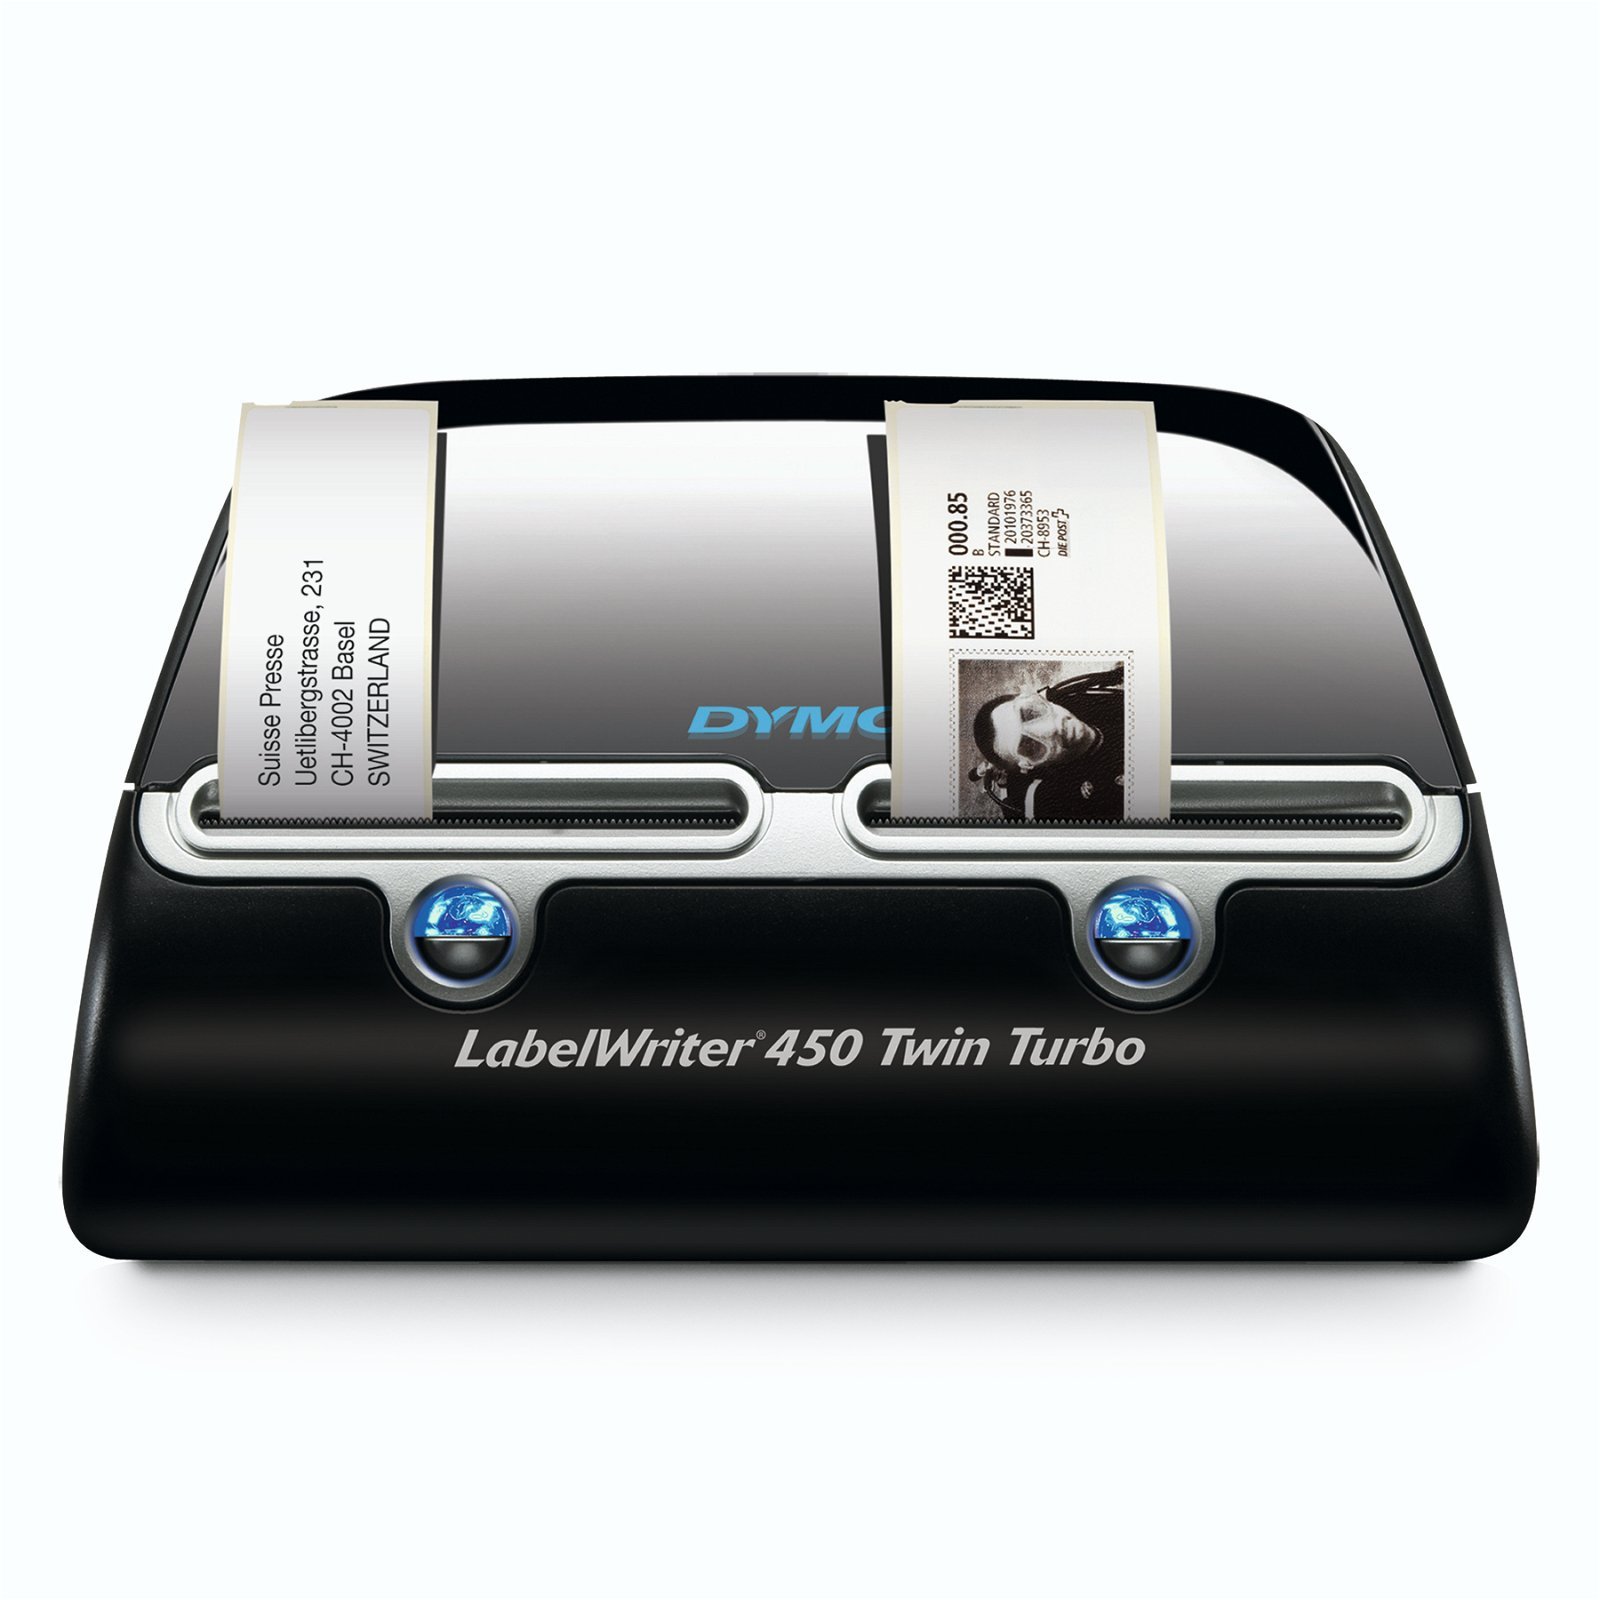 Dymo LabelWriter 450 Twin Turbo labelprinter